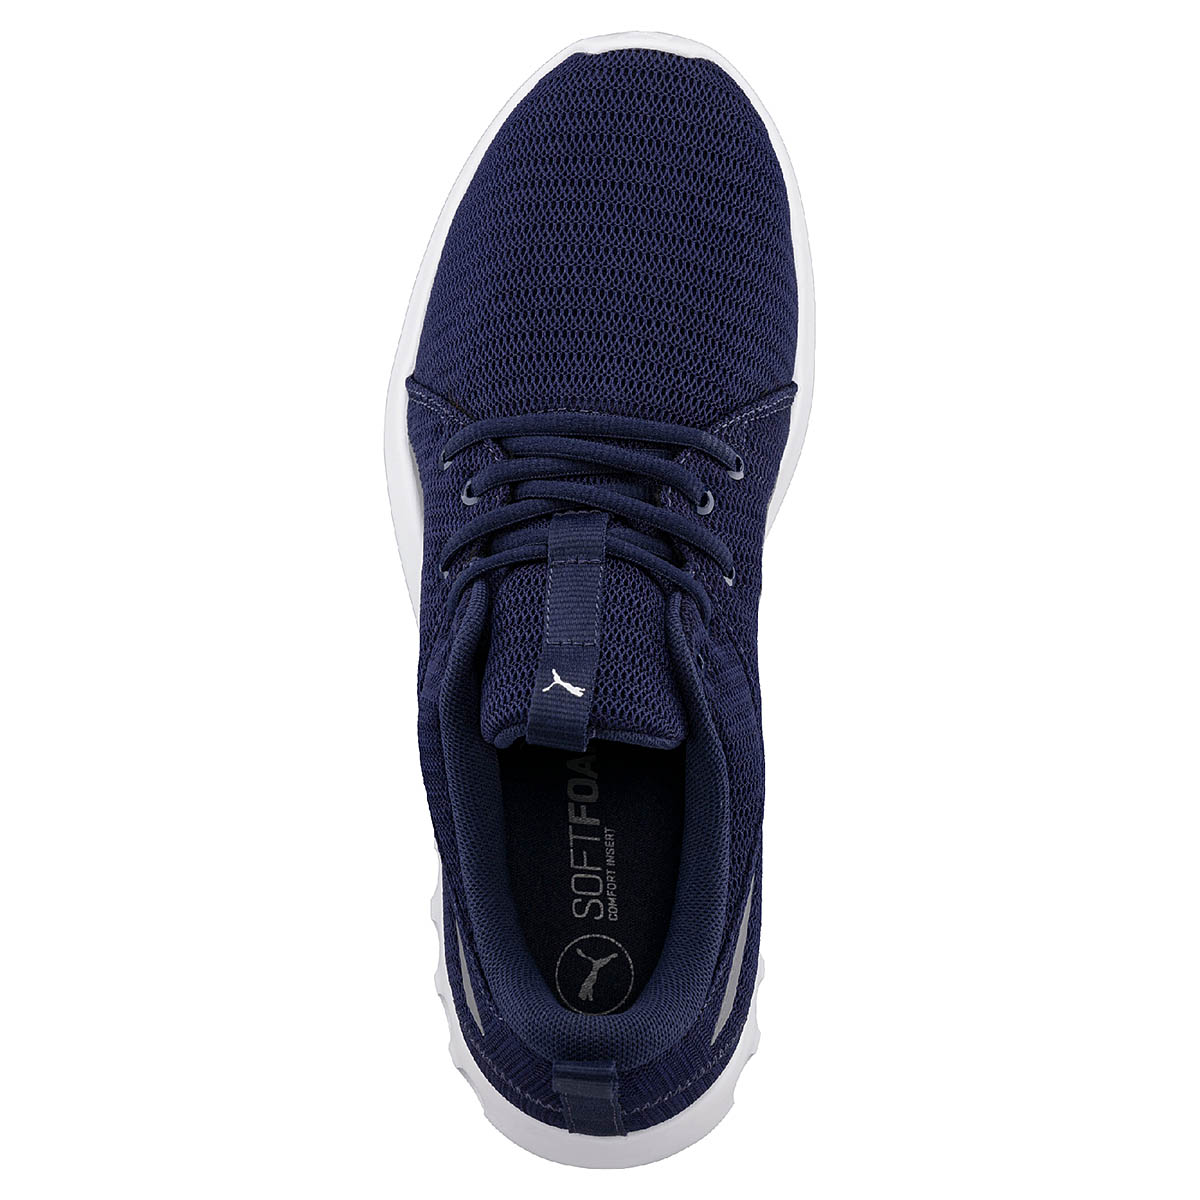 Puma Carson 2 Unisex Fitness Schuhe Sneaker 190037 03 Laufschuh blau